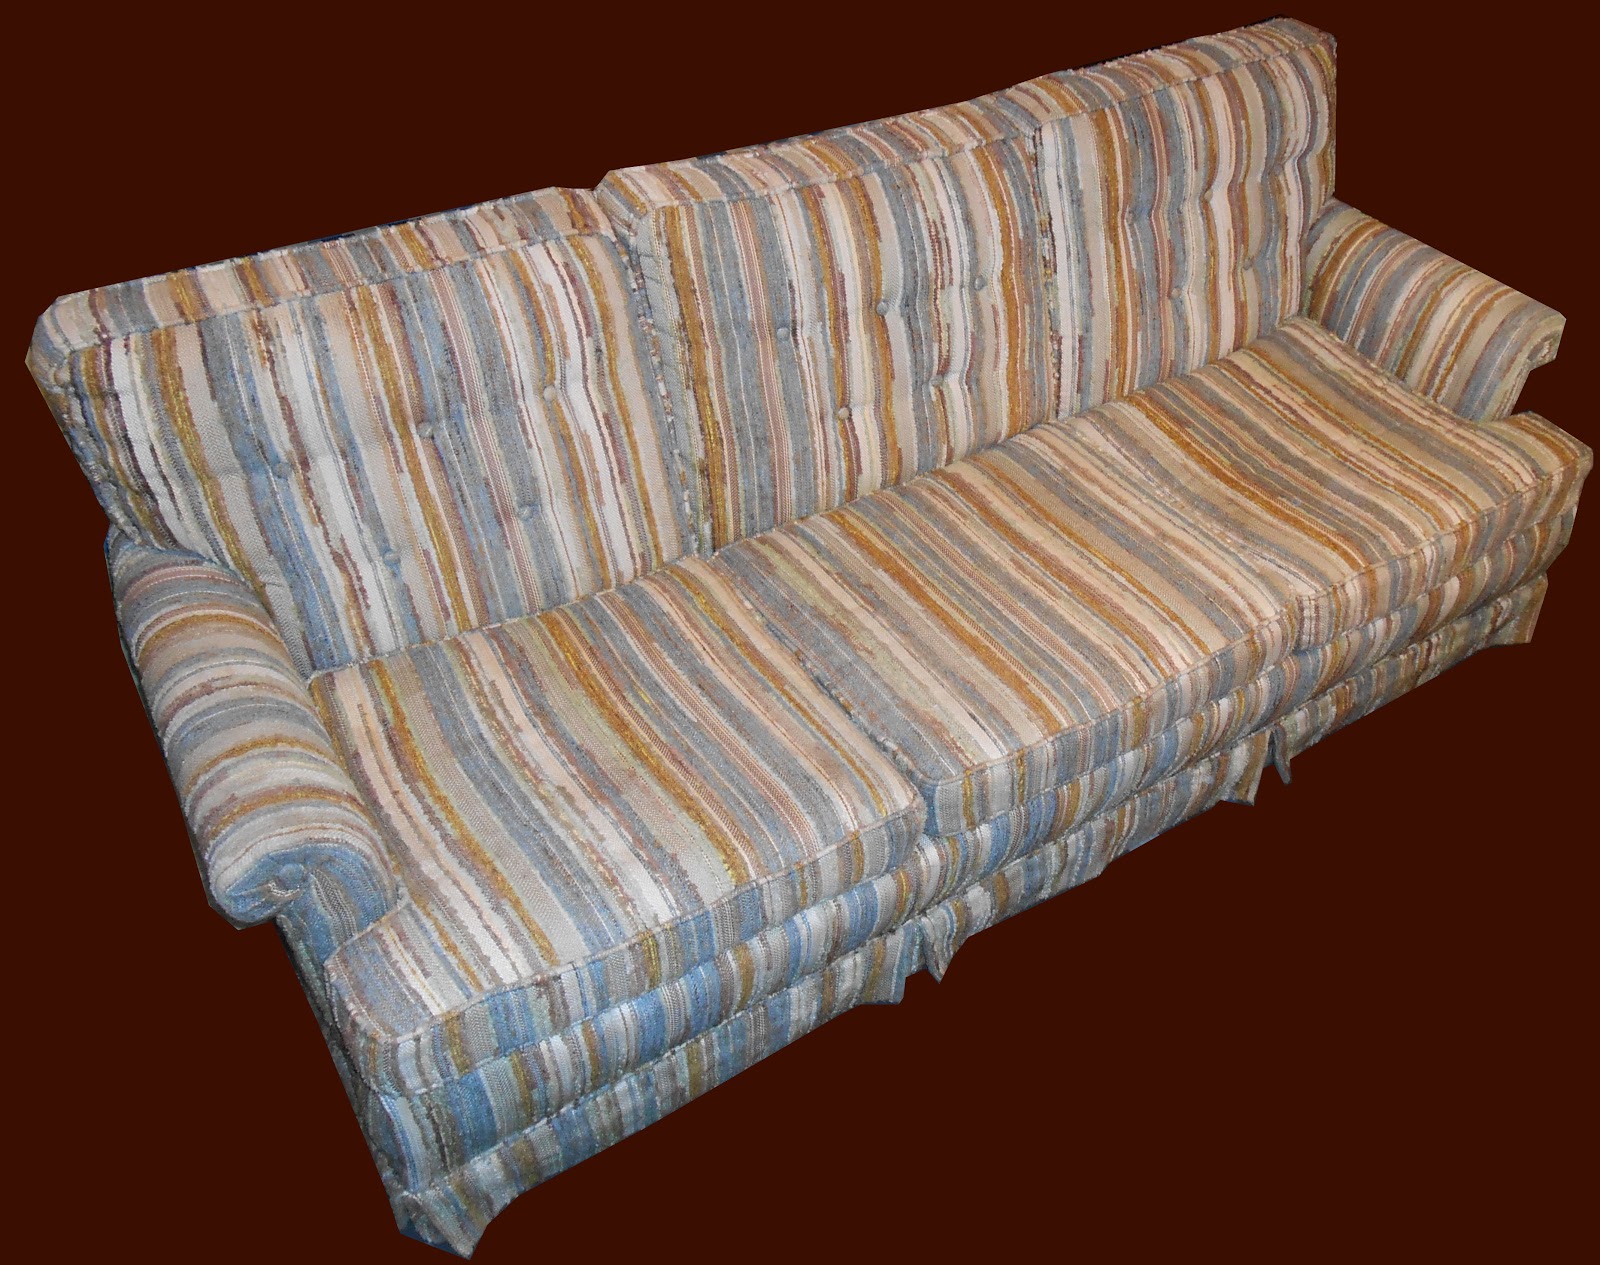 Uhuru Furniture & Collectibles: Vintage Sofa-SOLD